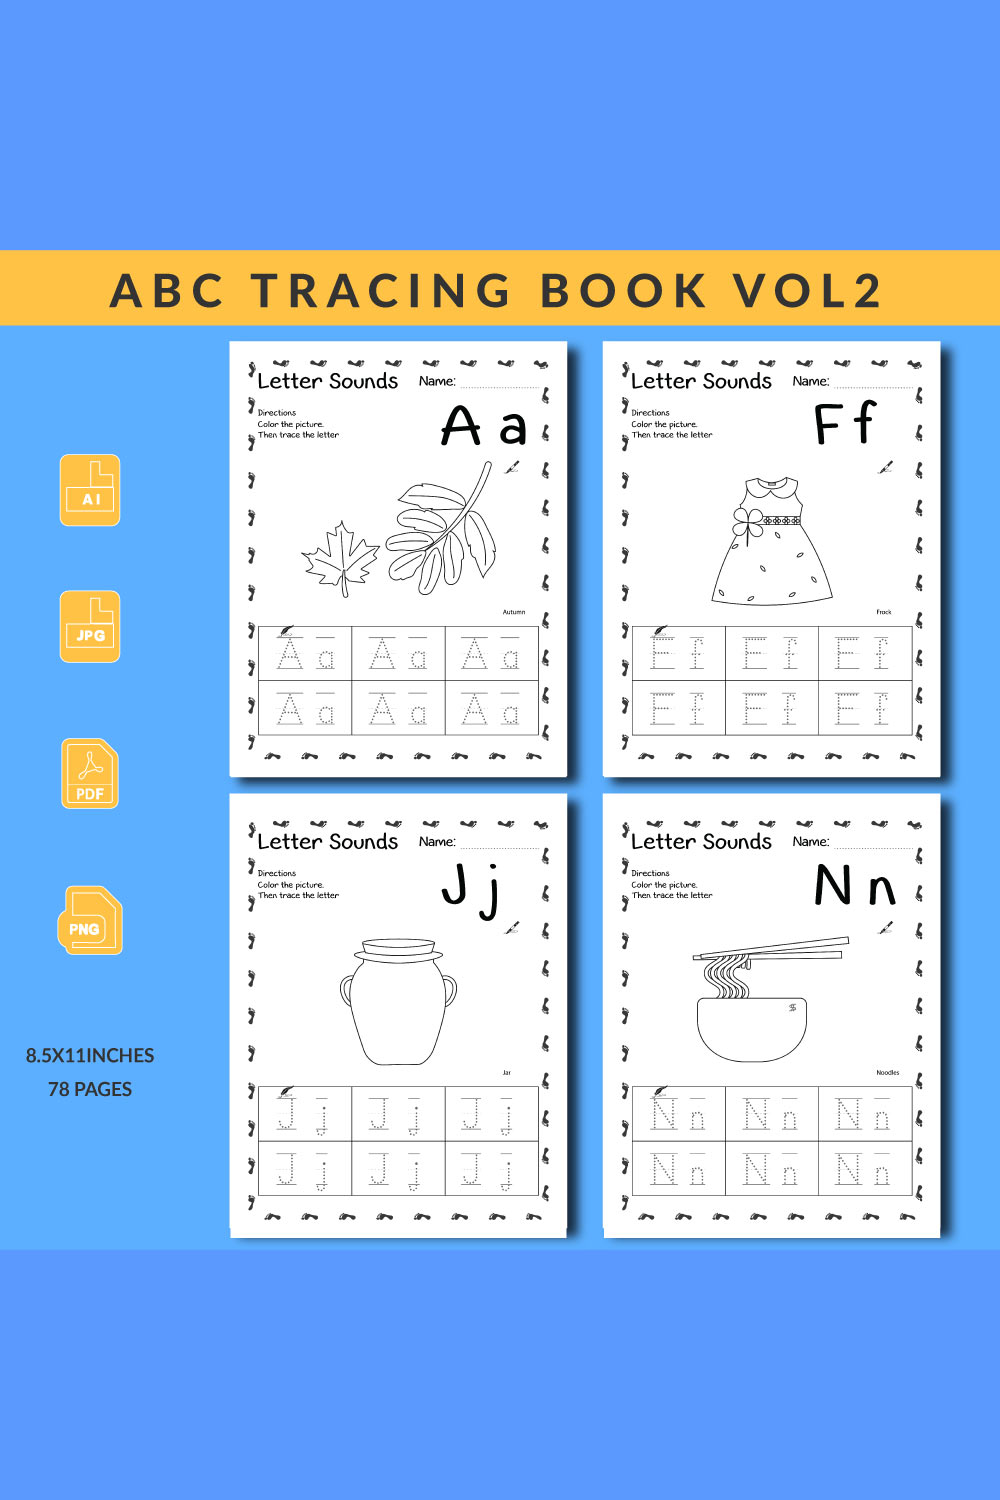 ABC Tracing Book Design pinterest image.